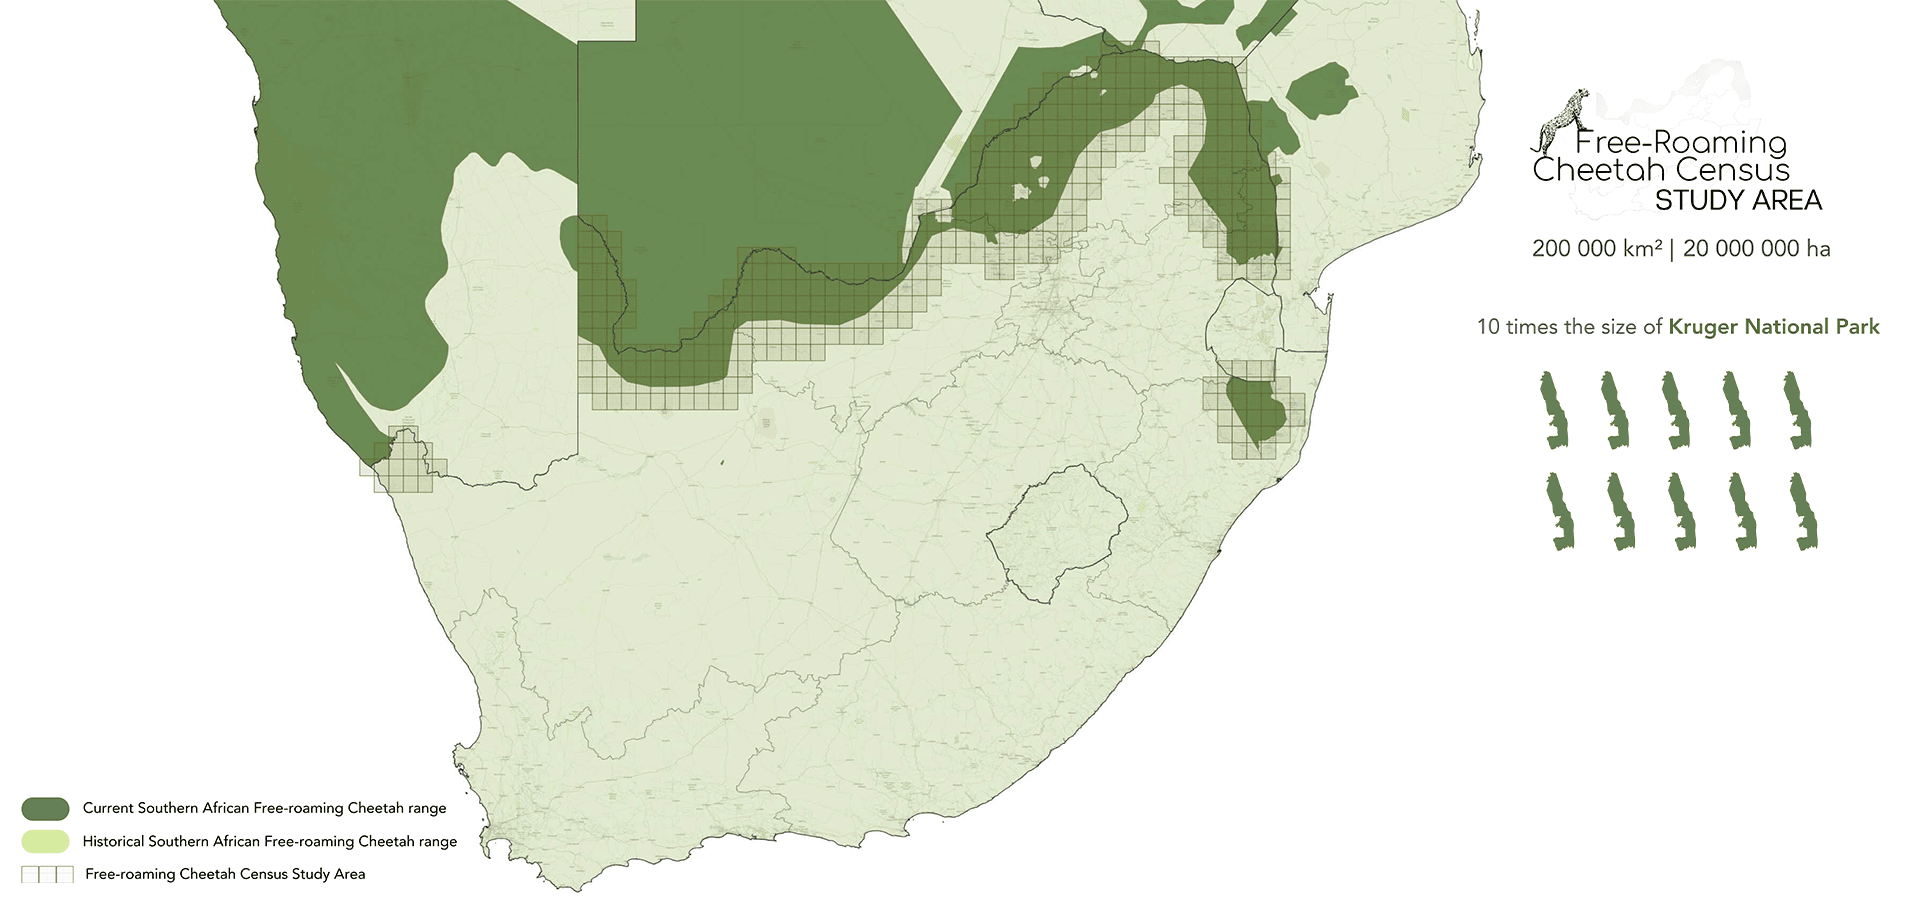 Free Roaming Cheetah Census Study area on map